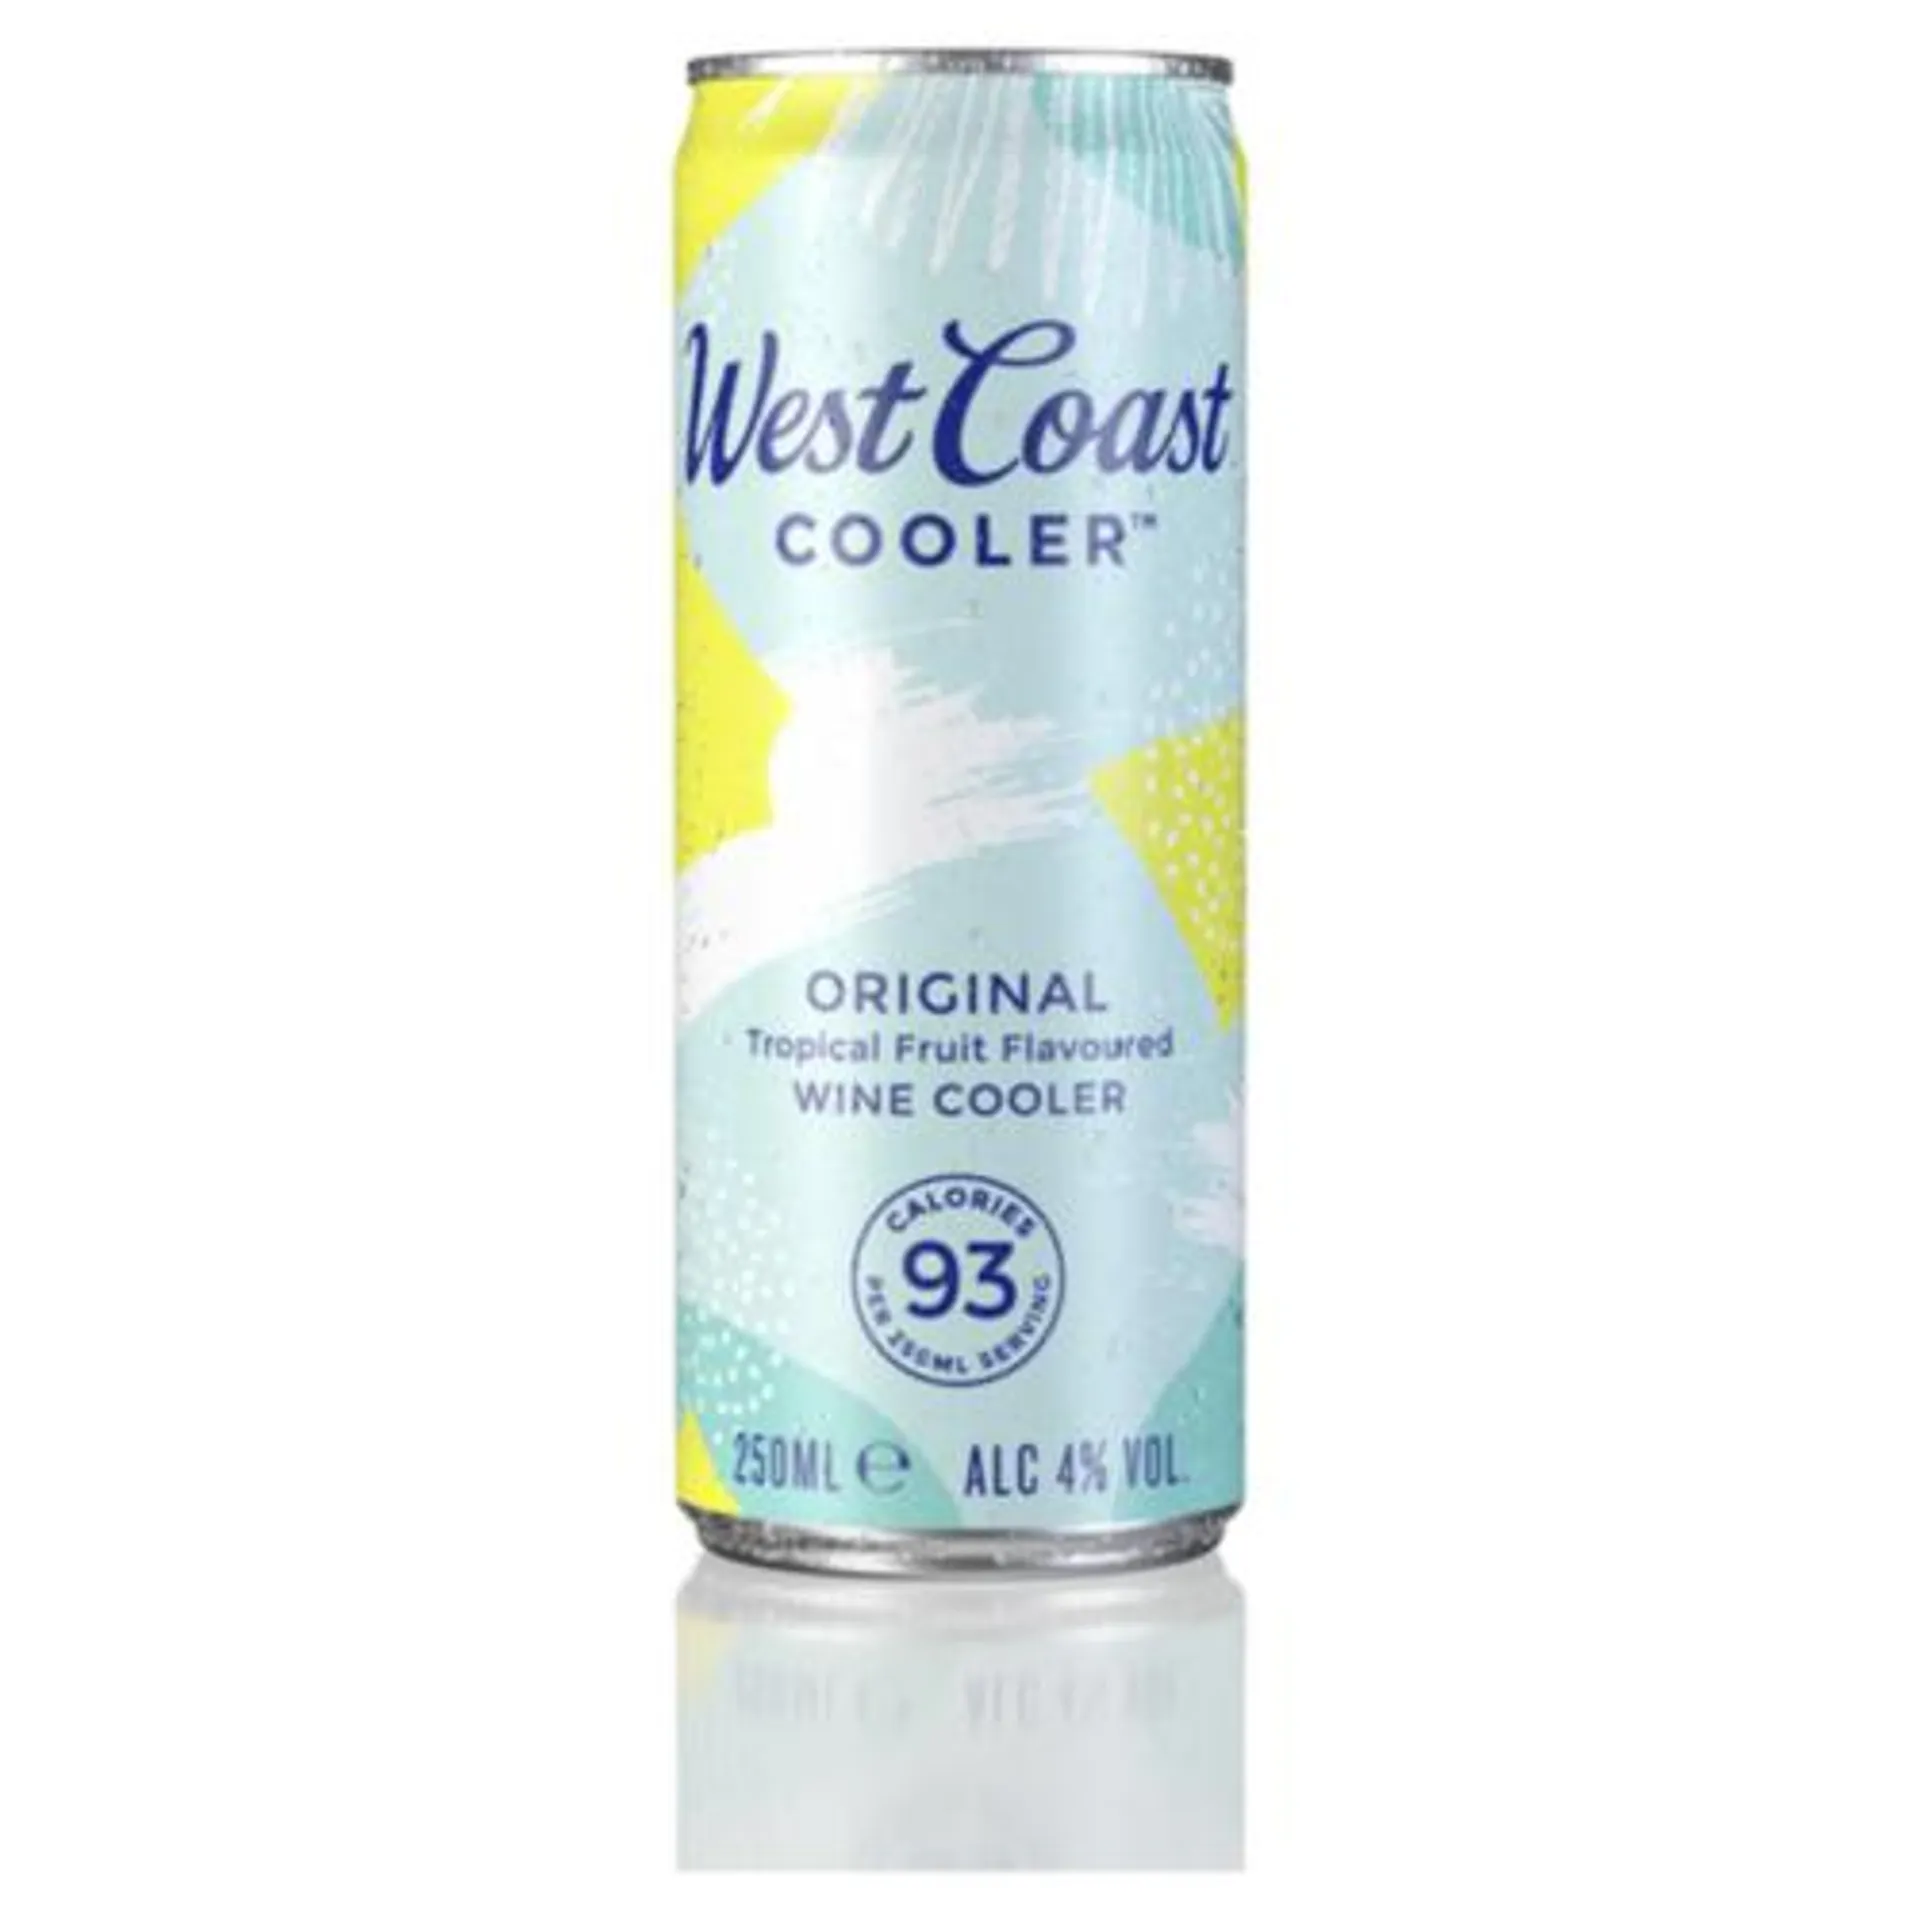 West Coast Cooler Original